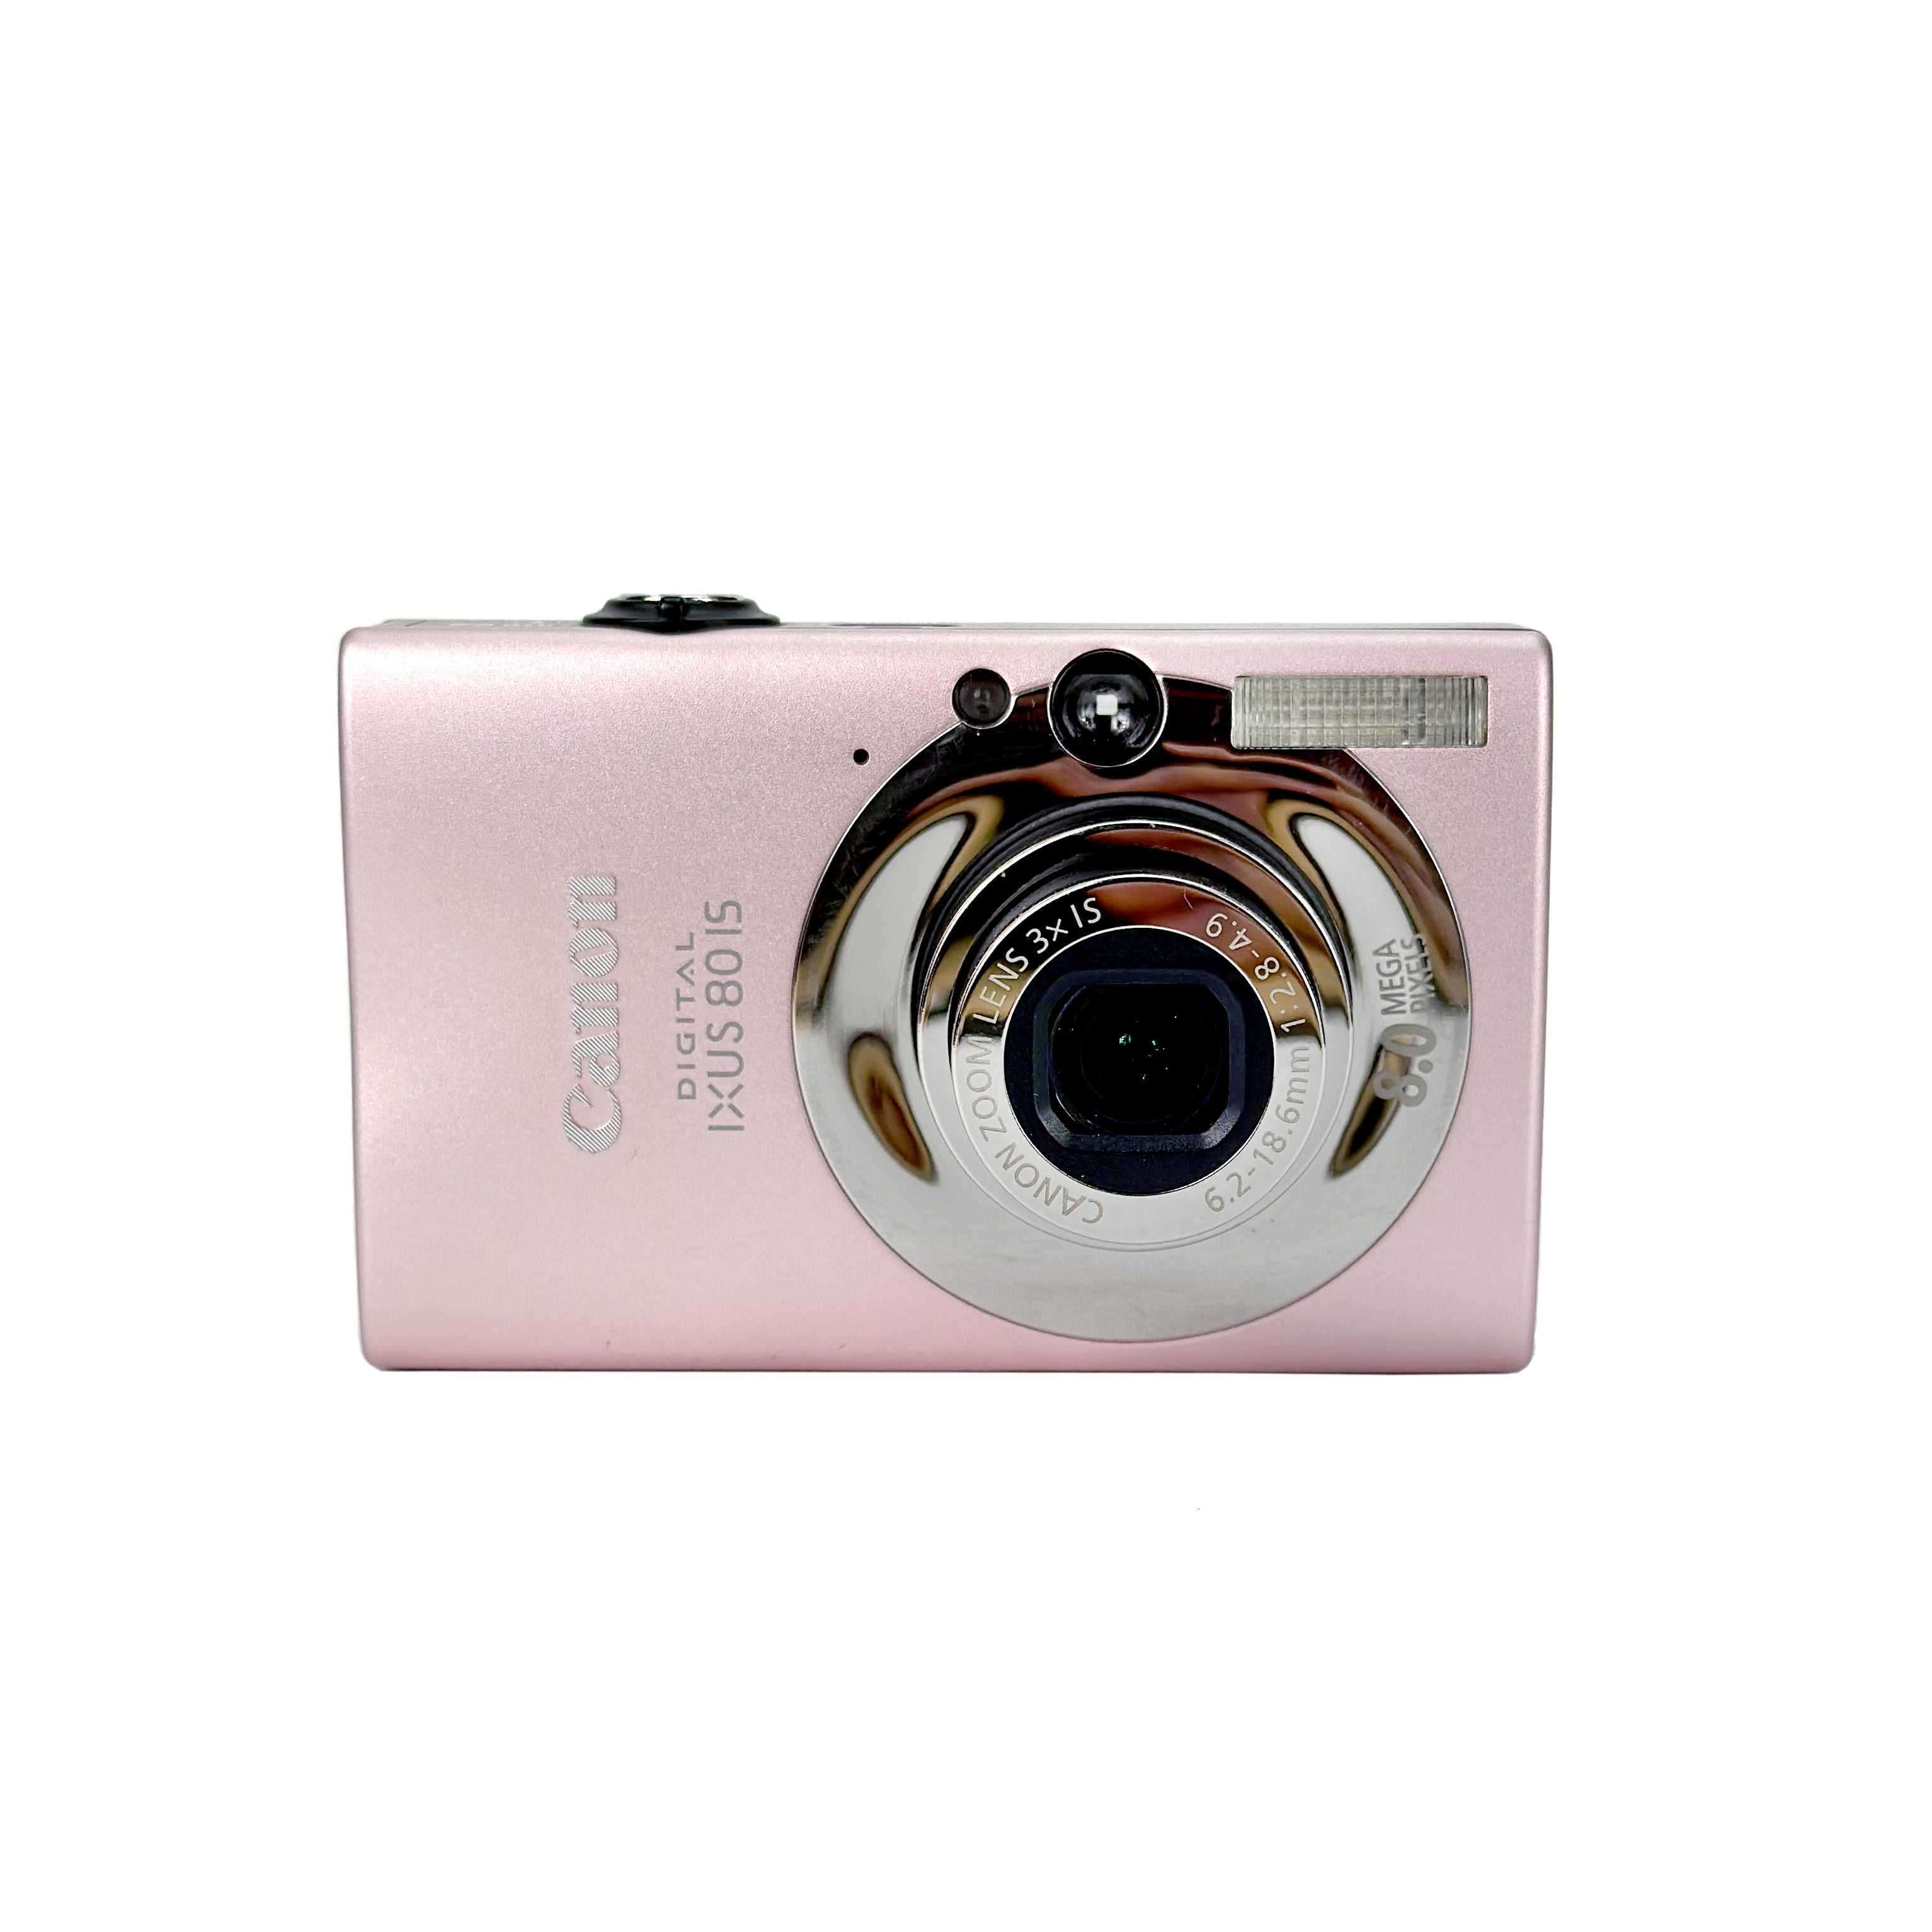 Canon IXUS 80 IS Digital Compact - Pink – Retro Camera Shop